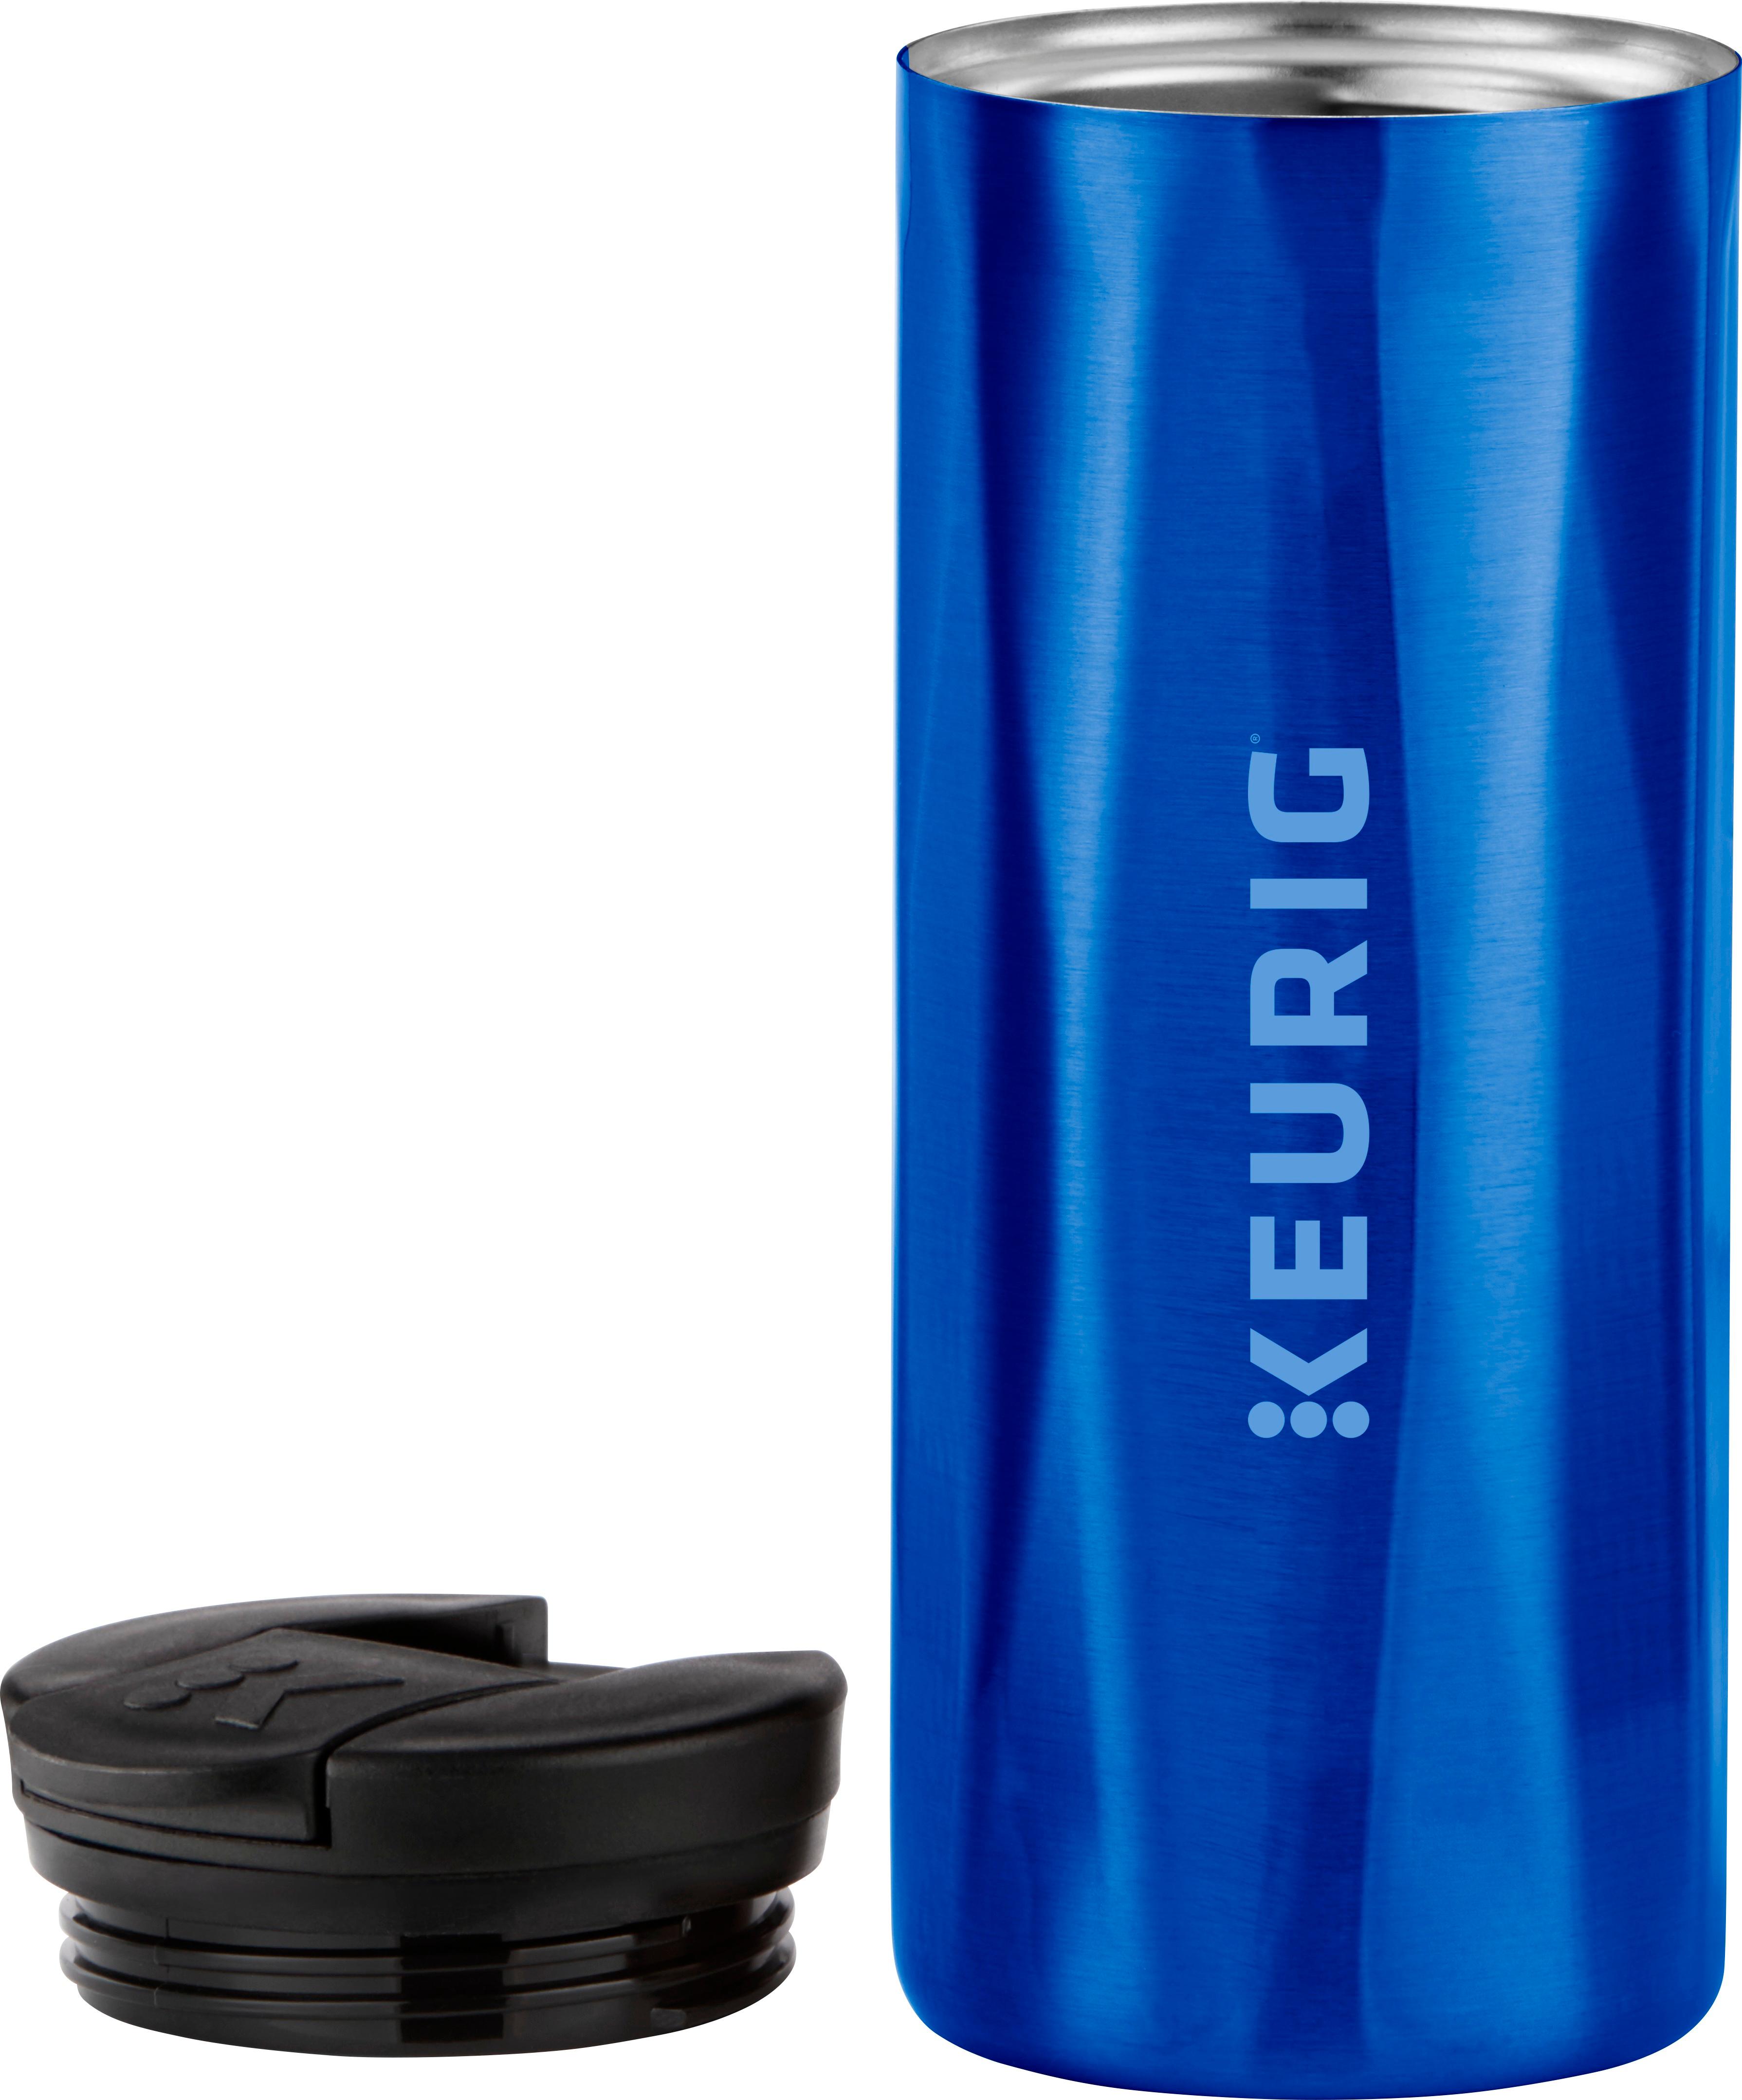 Keurig Coffee Travel Mug, Fits Under Any Keurig K-Cup Pod Coffee Maker, 14 oz, Royal Blue